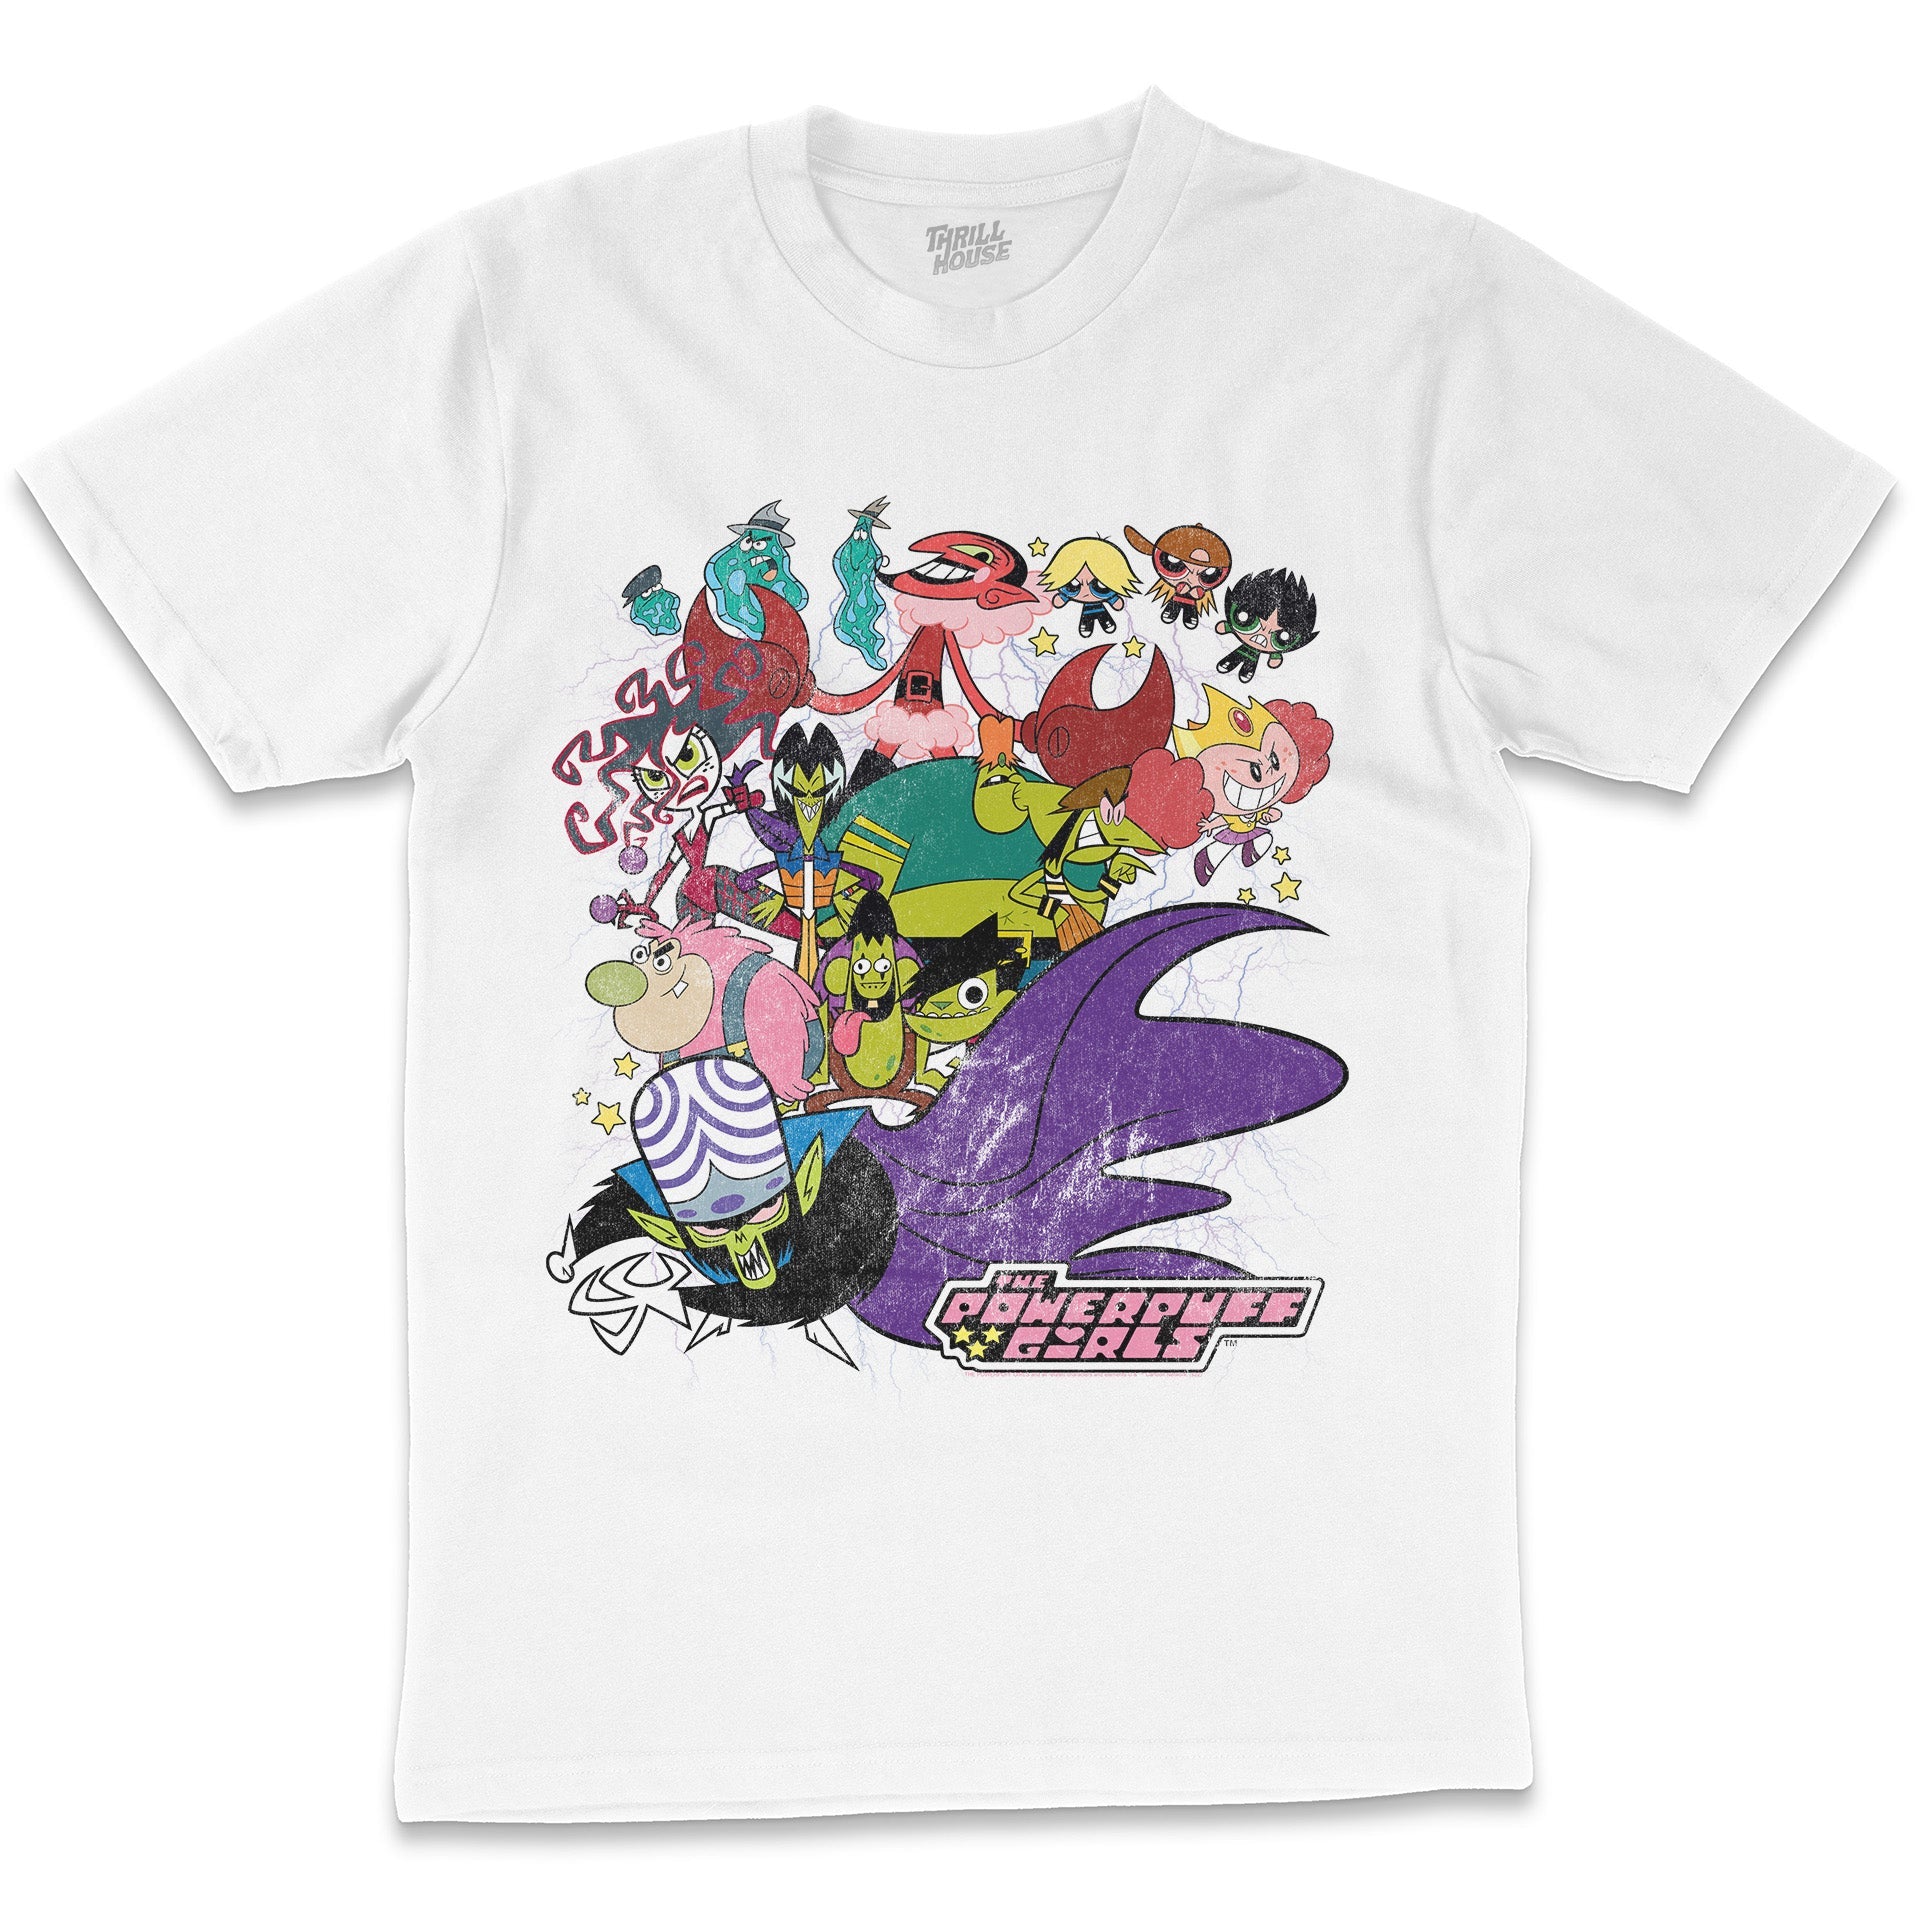 Powerpuff Girls Villains 90s Superhero Cartoon Animation Series Officially Licensed Cotton T-Shirt